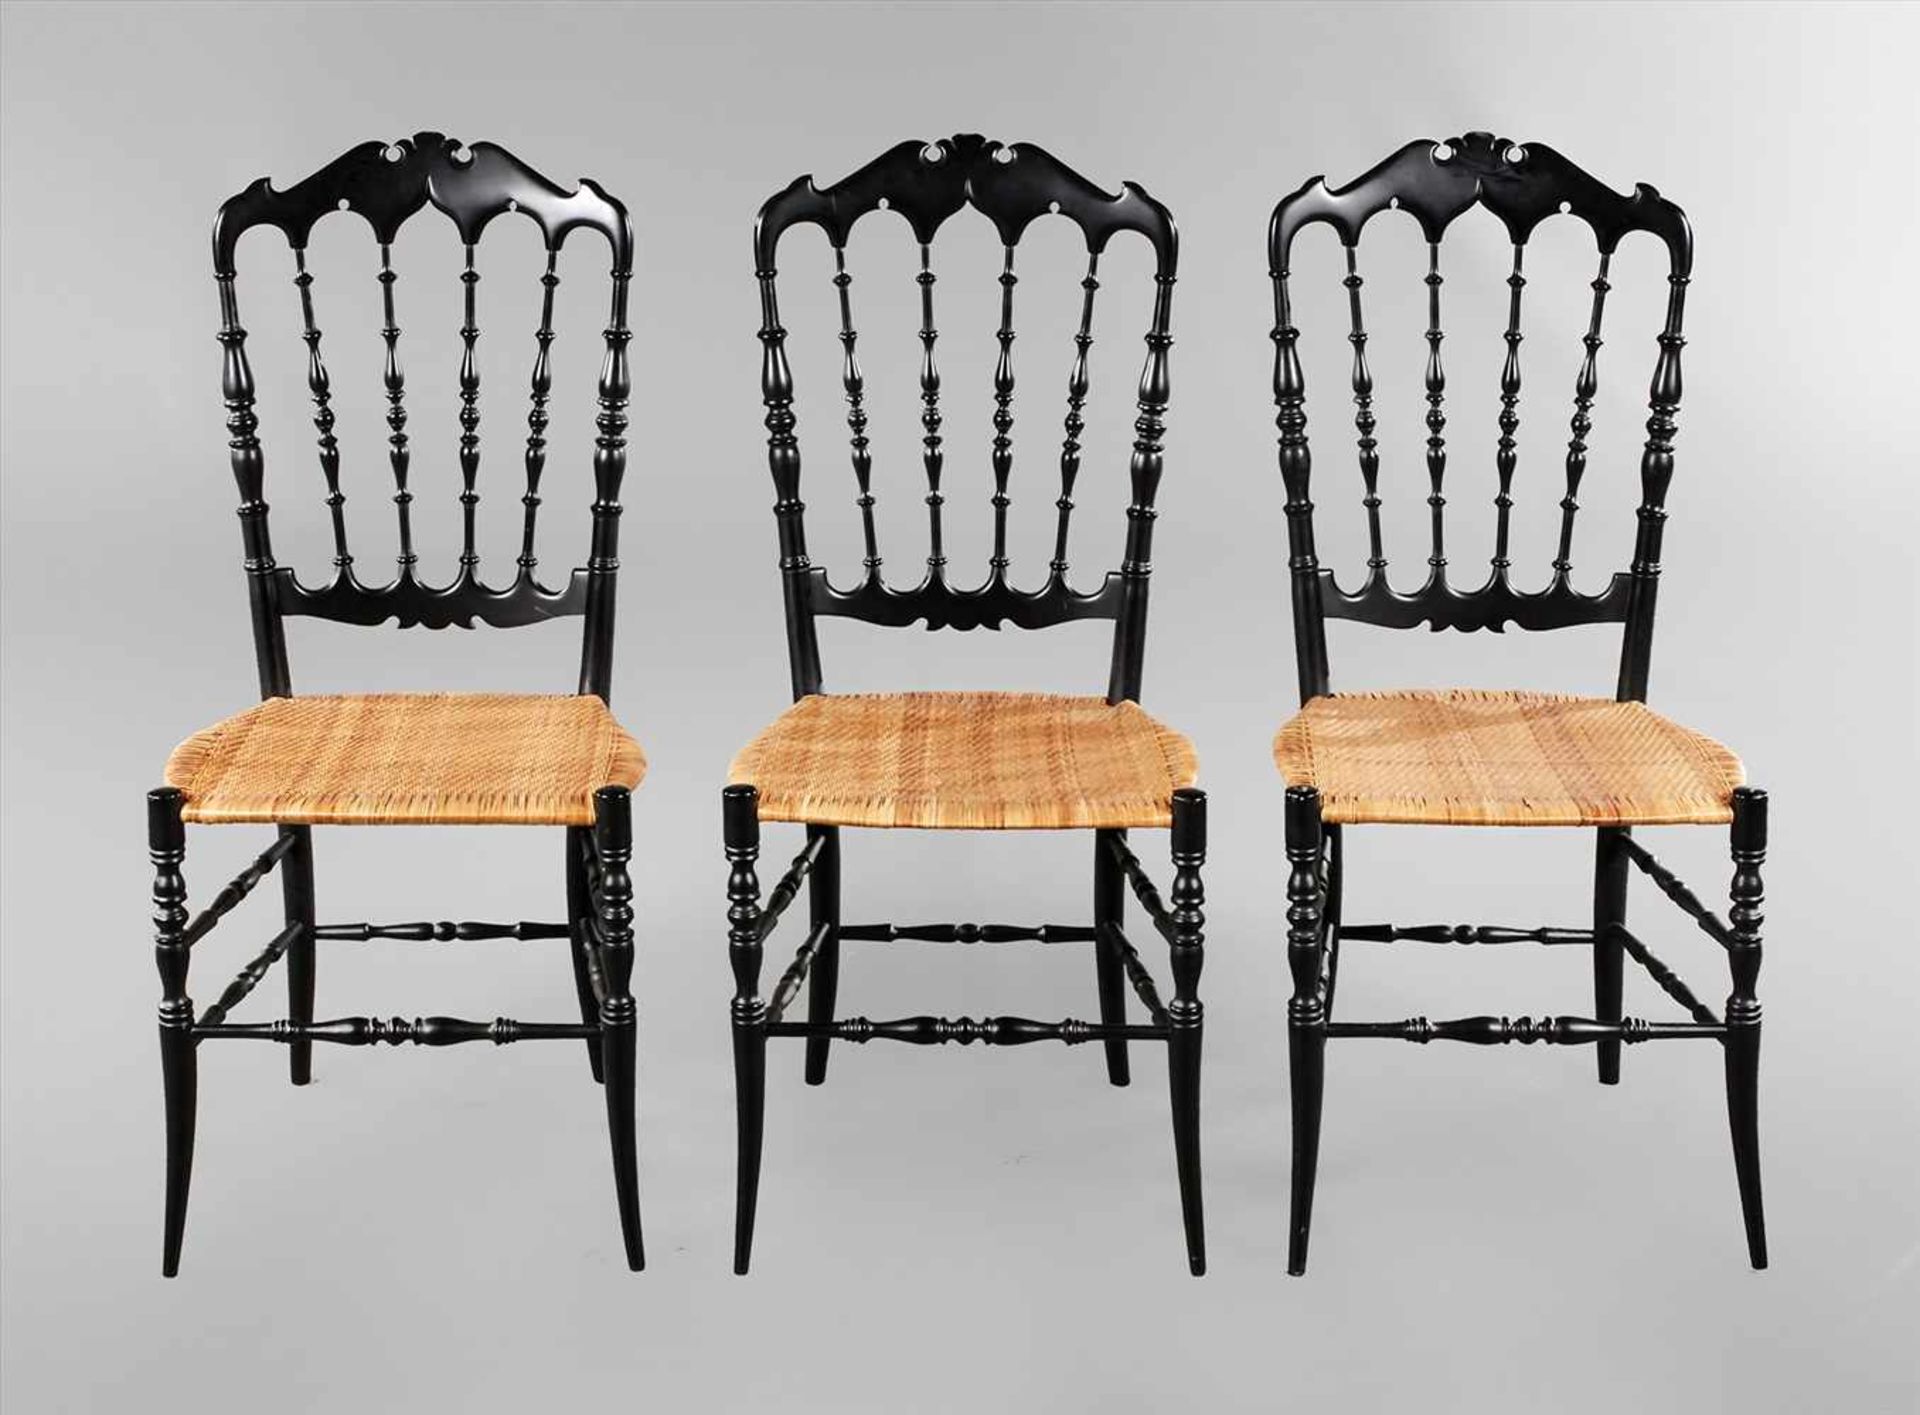 Drei Chiavari-Stühle Entwurf Giuseppe Gaetano Descalzi, Ausführung Italien, 1950/60er Jahre, Holz